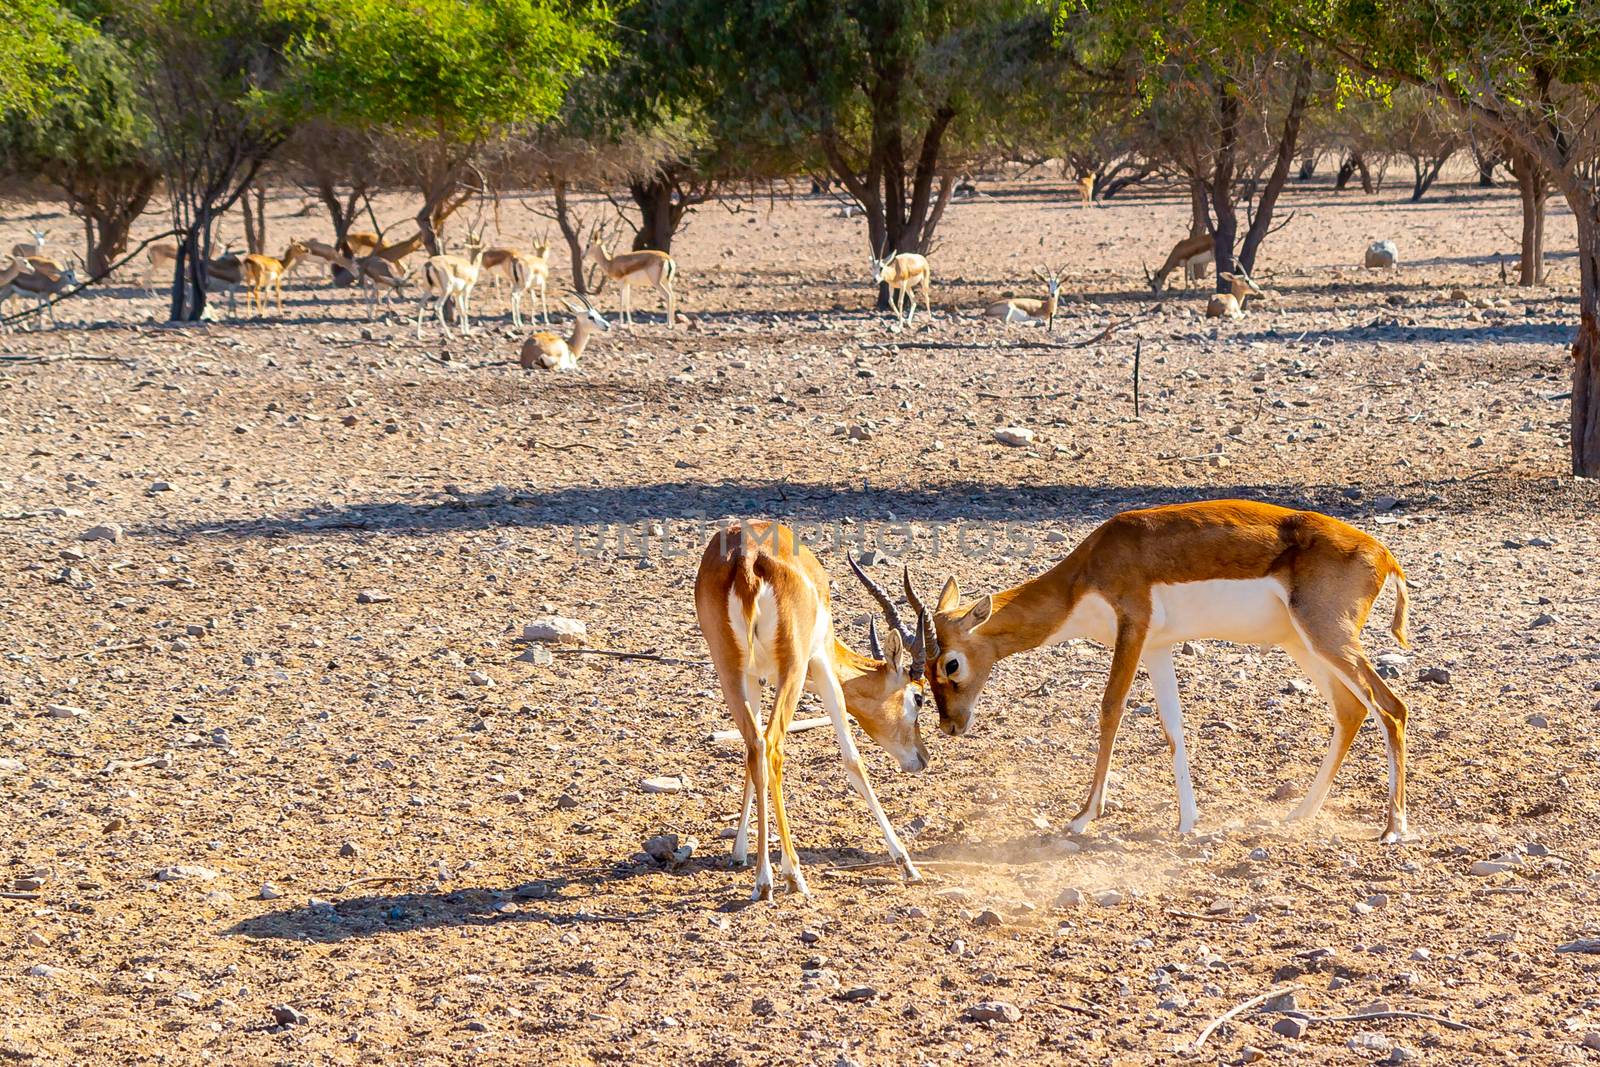 Fight of two young antelopes in a safari park on Sir Bani Yas Island, Abu Dhabi, UAE.